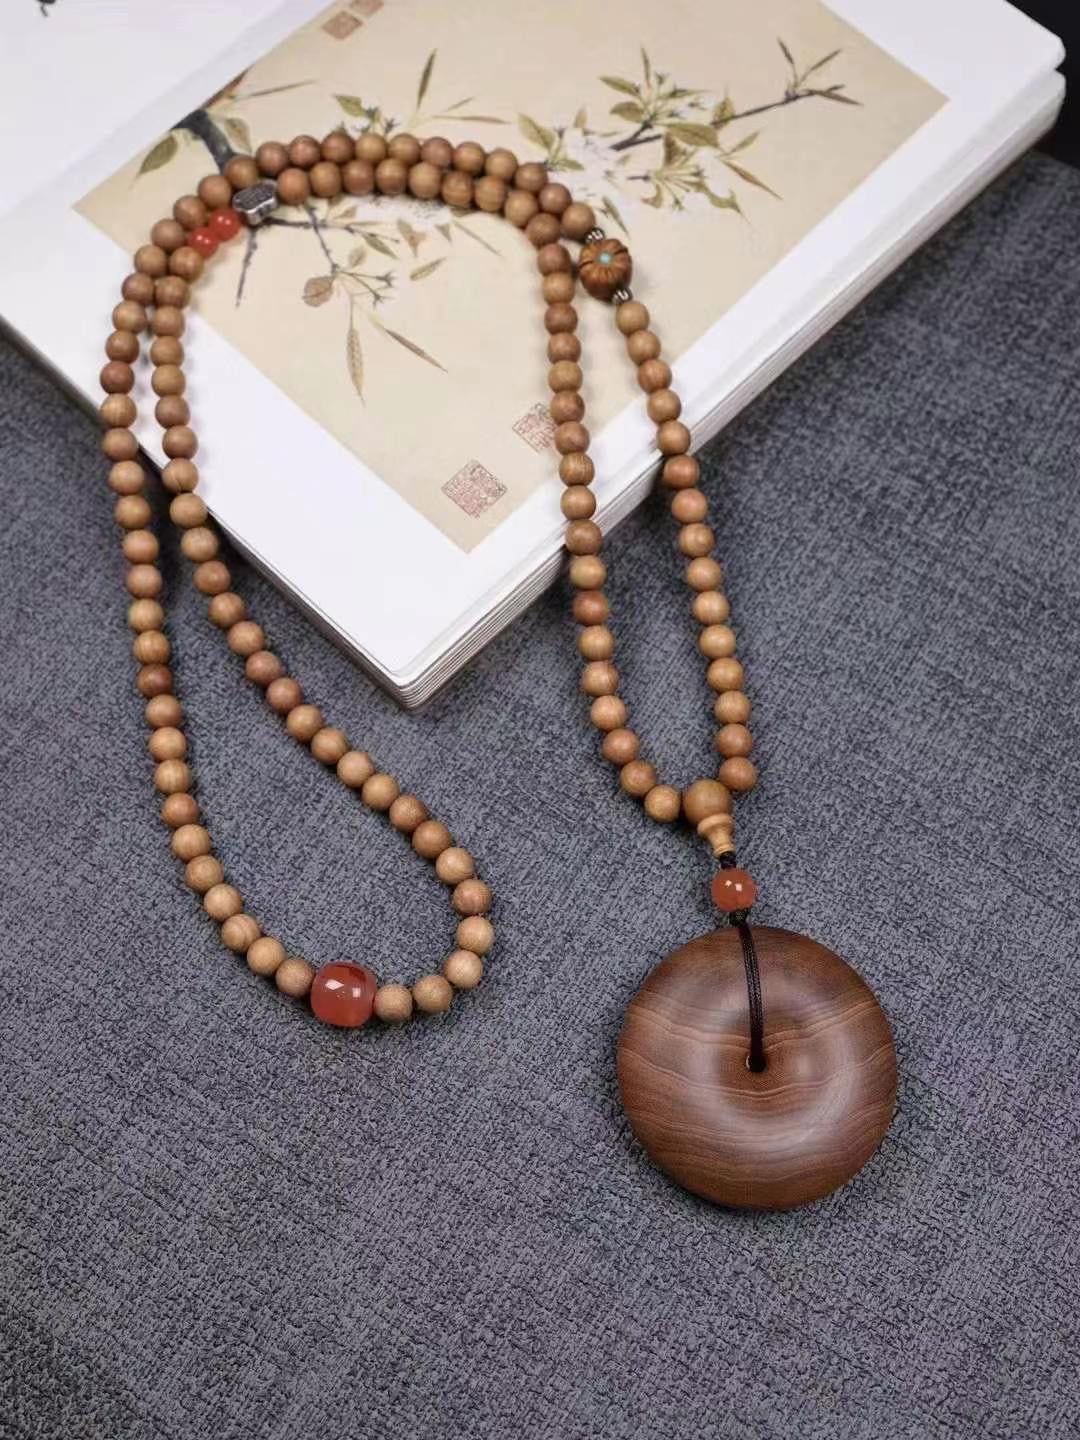 LaoShan Sandalwood Peaceful Clasp Necklace